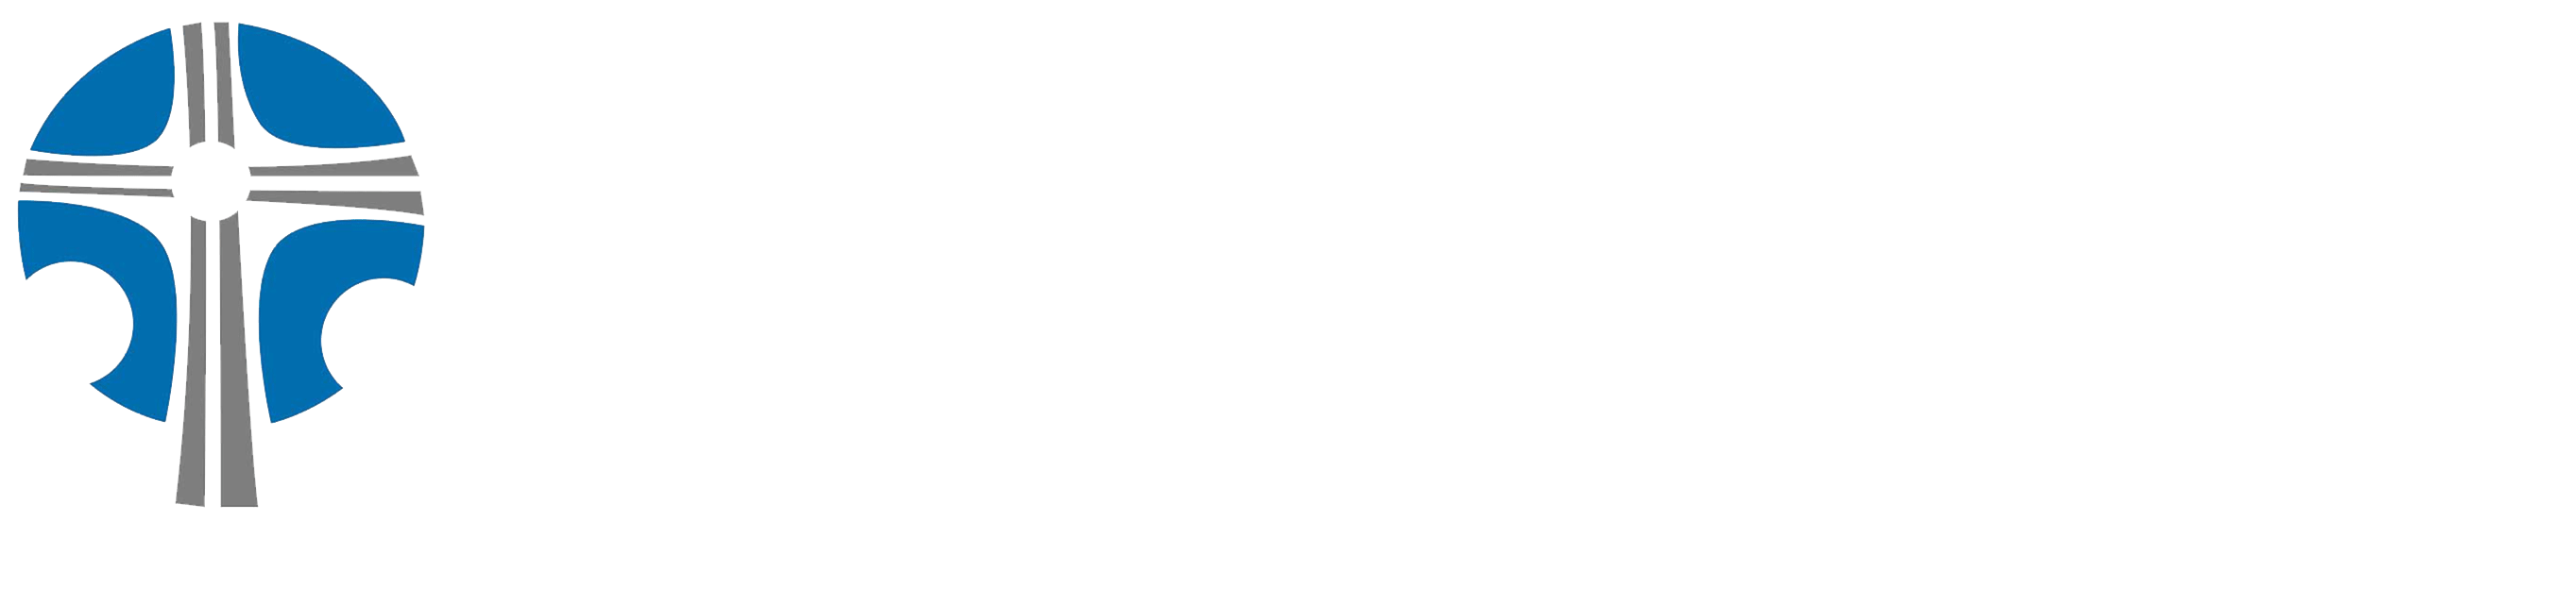 Retiro espiritual del Diaconado permanente del Ecuador 2017